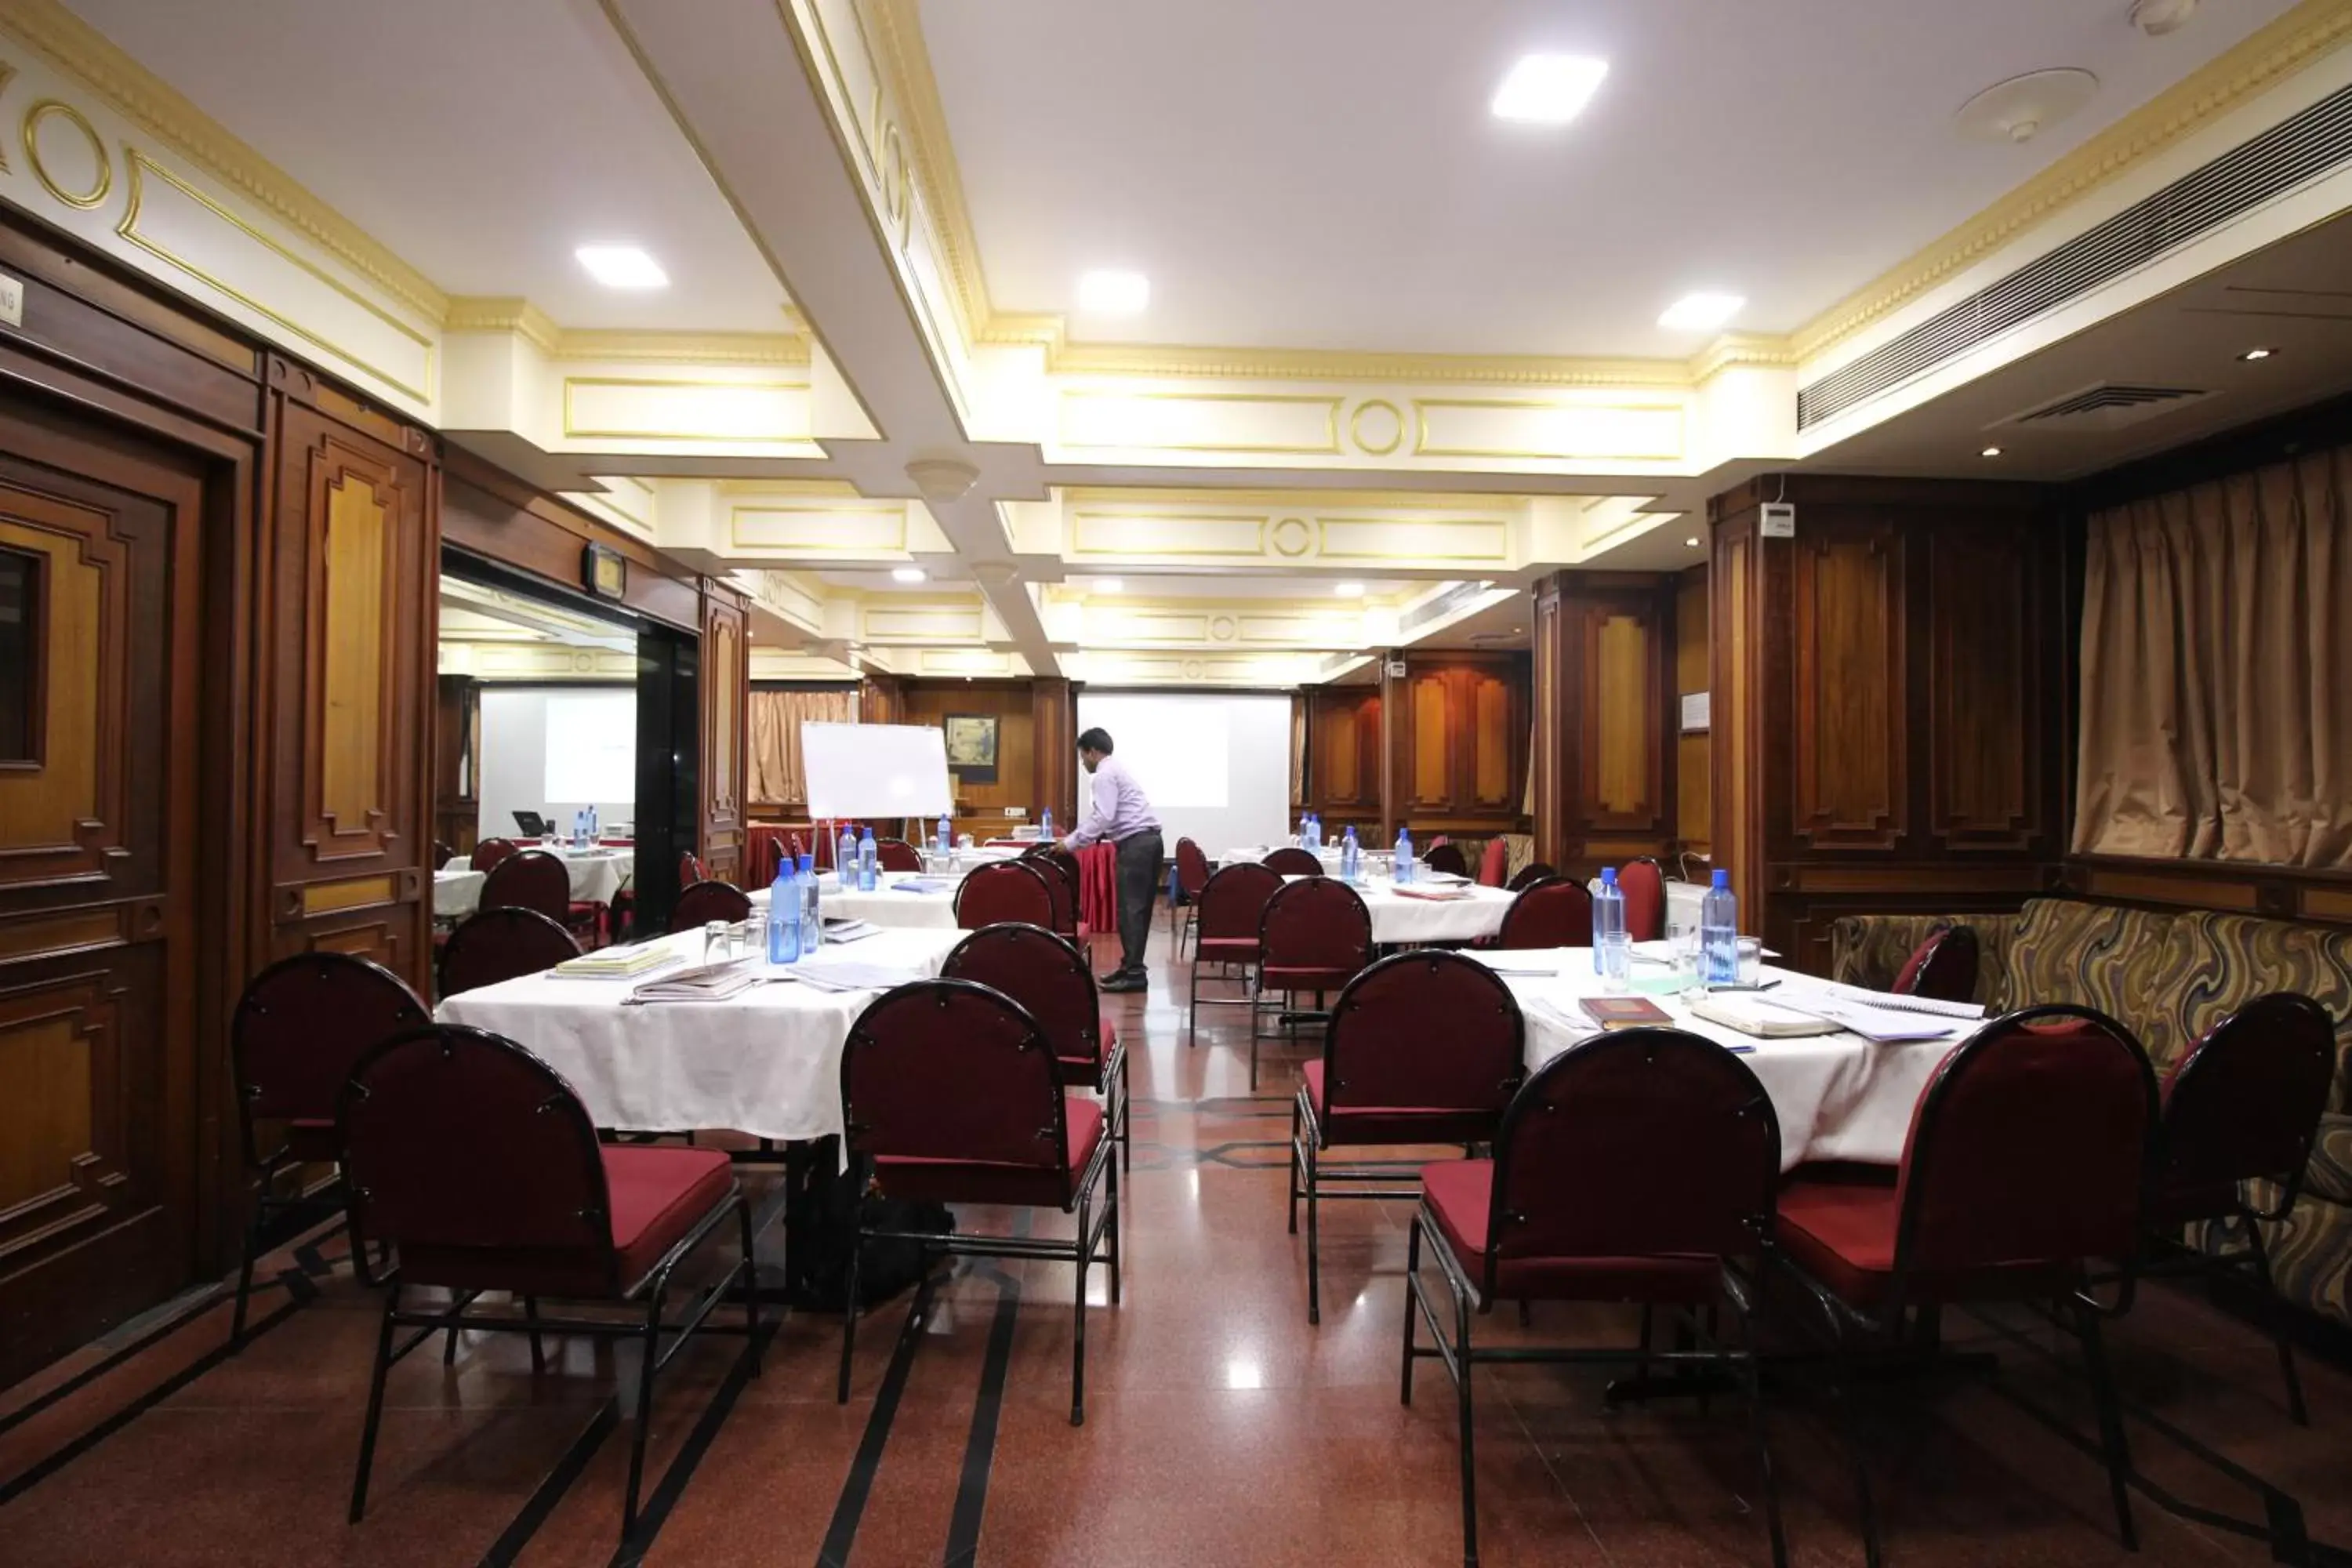 Buffet breakfast, Banquet Facilities in Hotel Park View, Mumbai